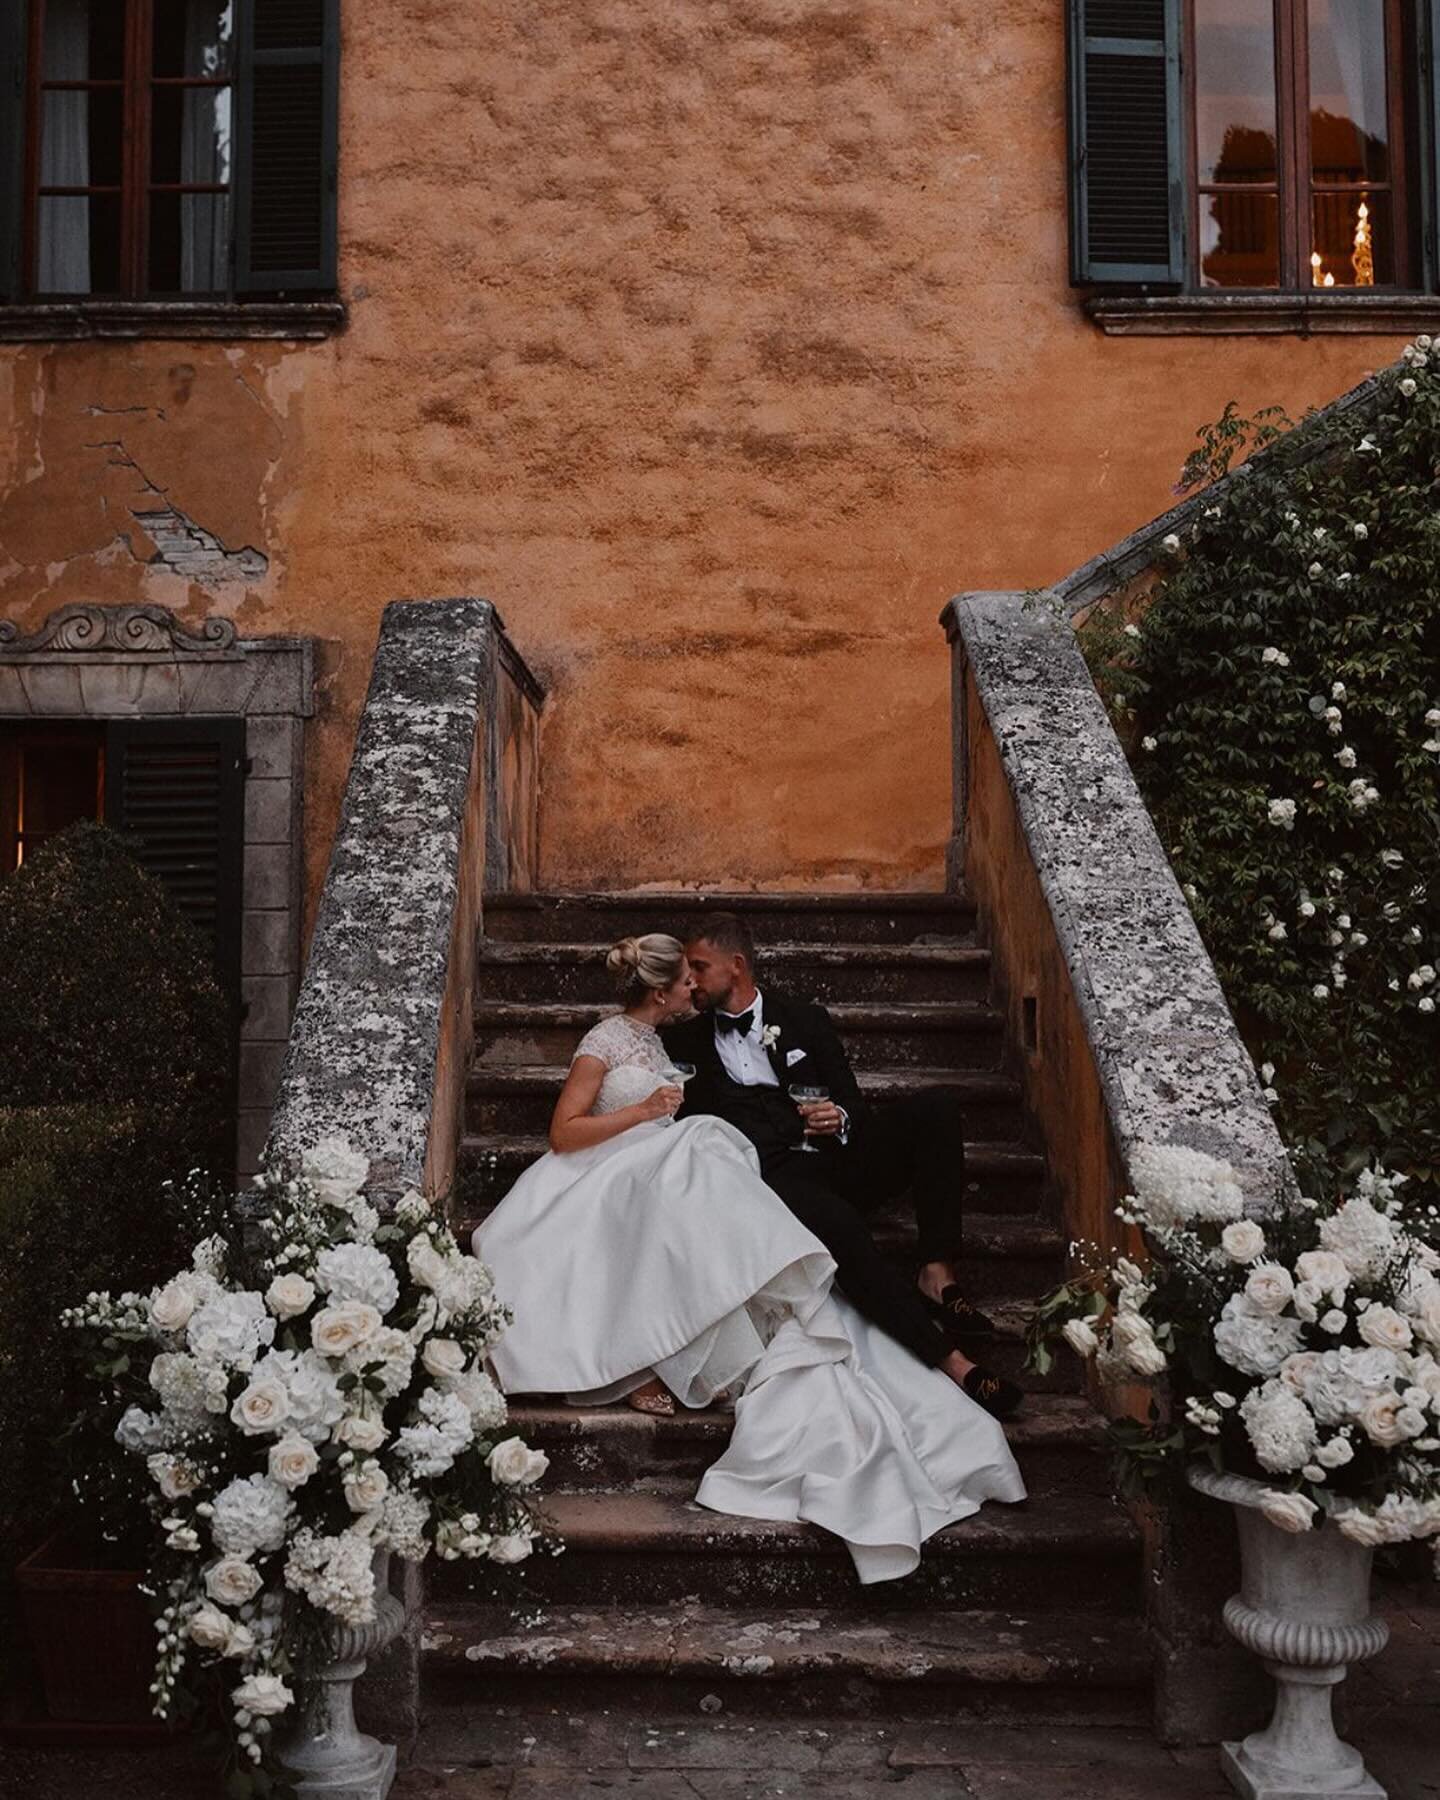 Tamsin &amp; Craig take a moment to themselves&hellip; 

@benjaminwheeler 

#italianwedding #italywedding #tuscanweddingvenue #luxurywedding #italyweddingplanner #italianweddingplanner